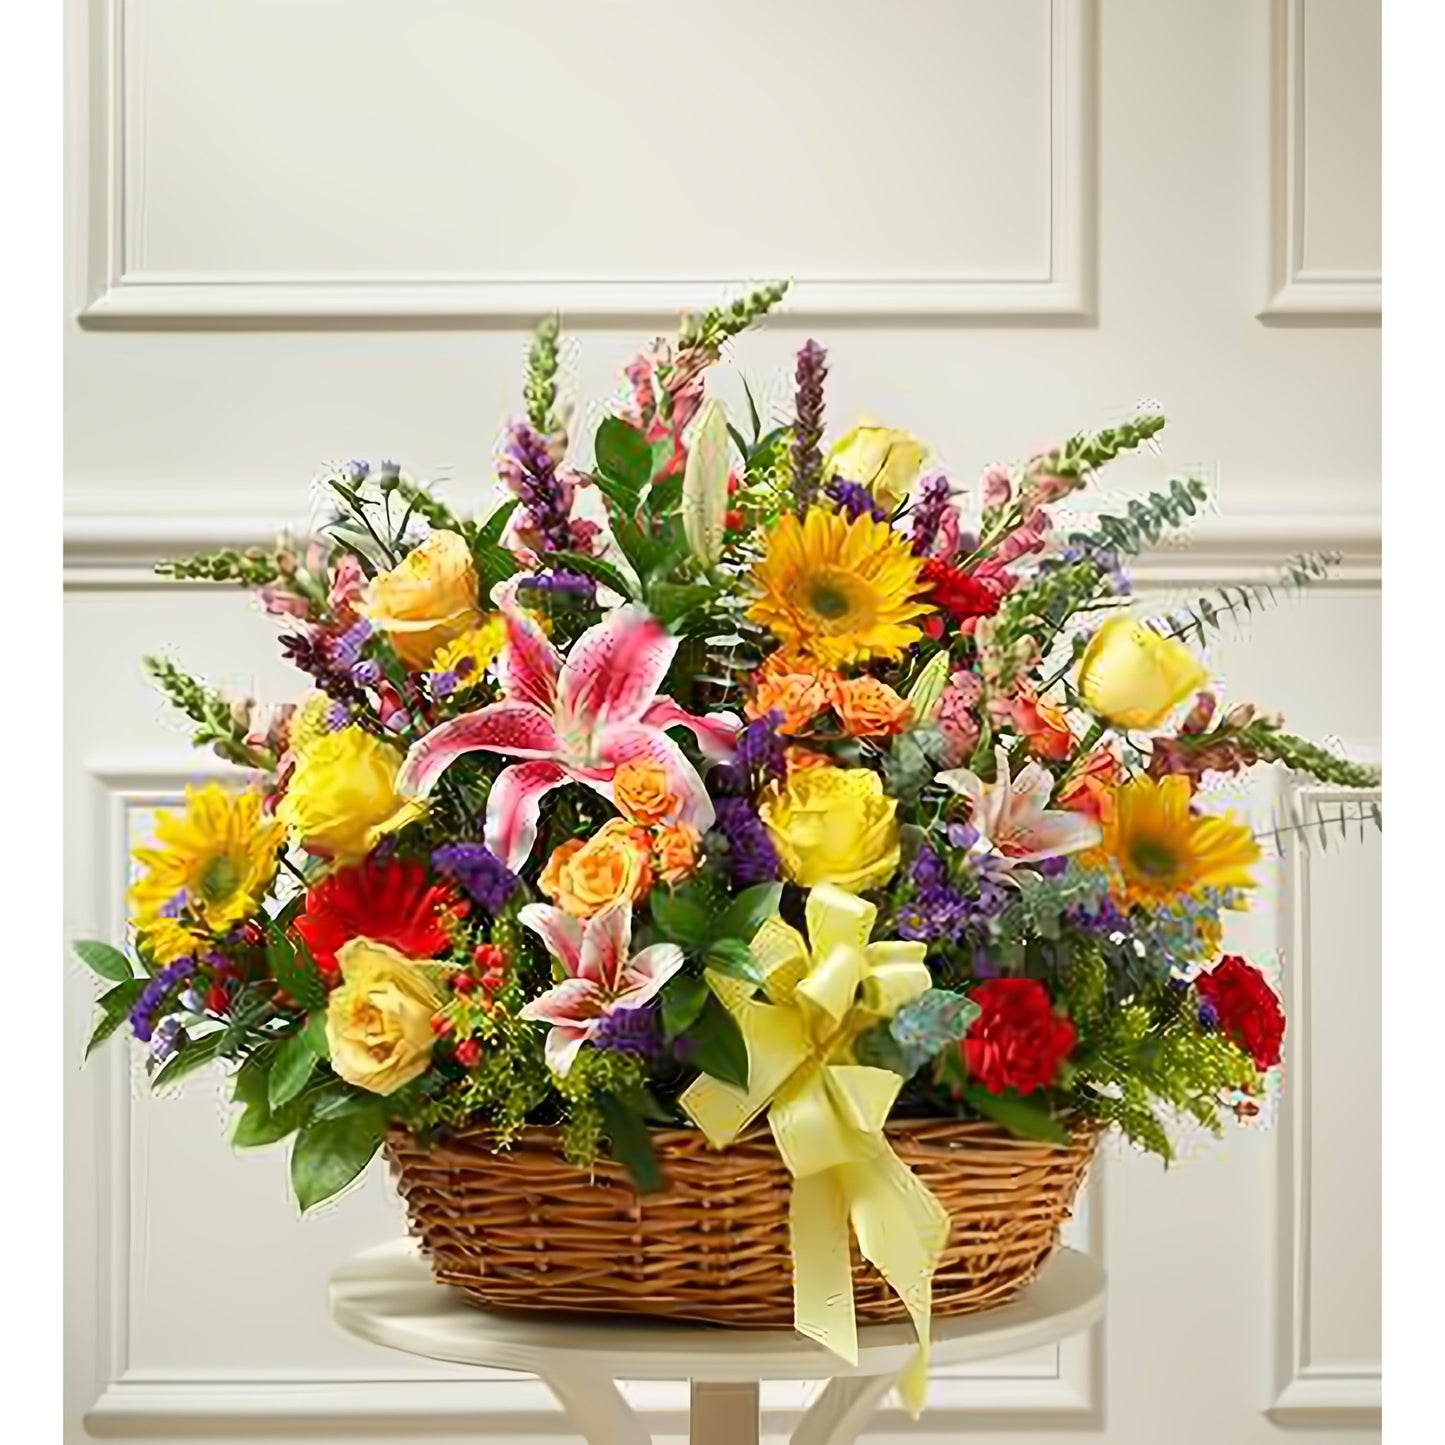 Bright Flower Sympathy Arrangement in Basket - Floral_Arrangement - Flower Delivery NYC